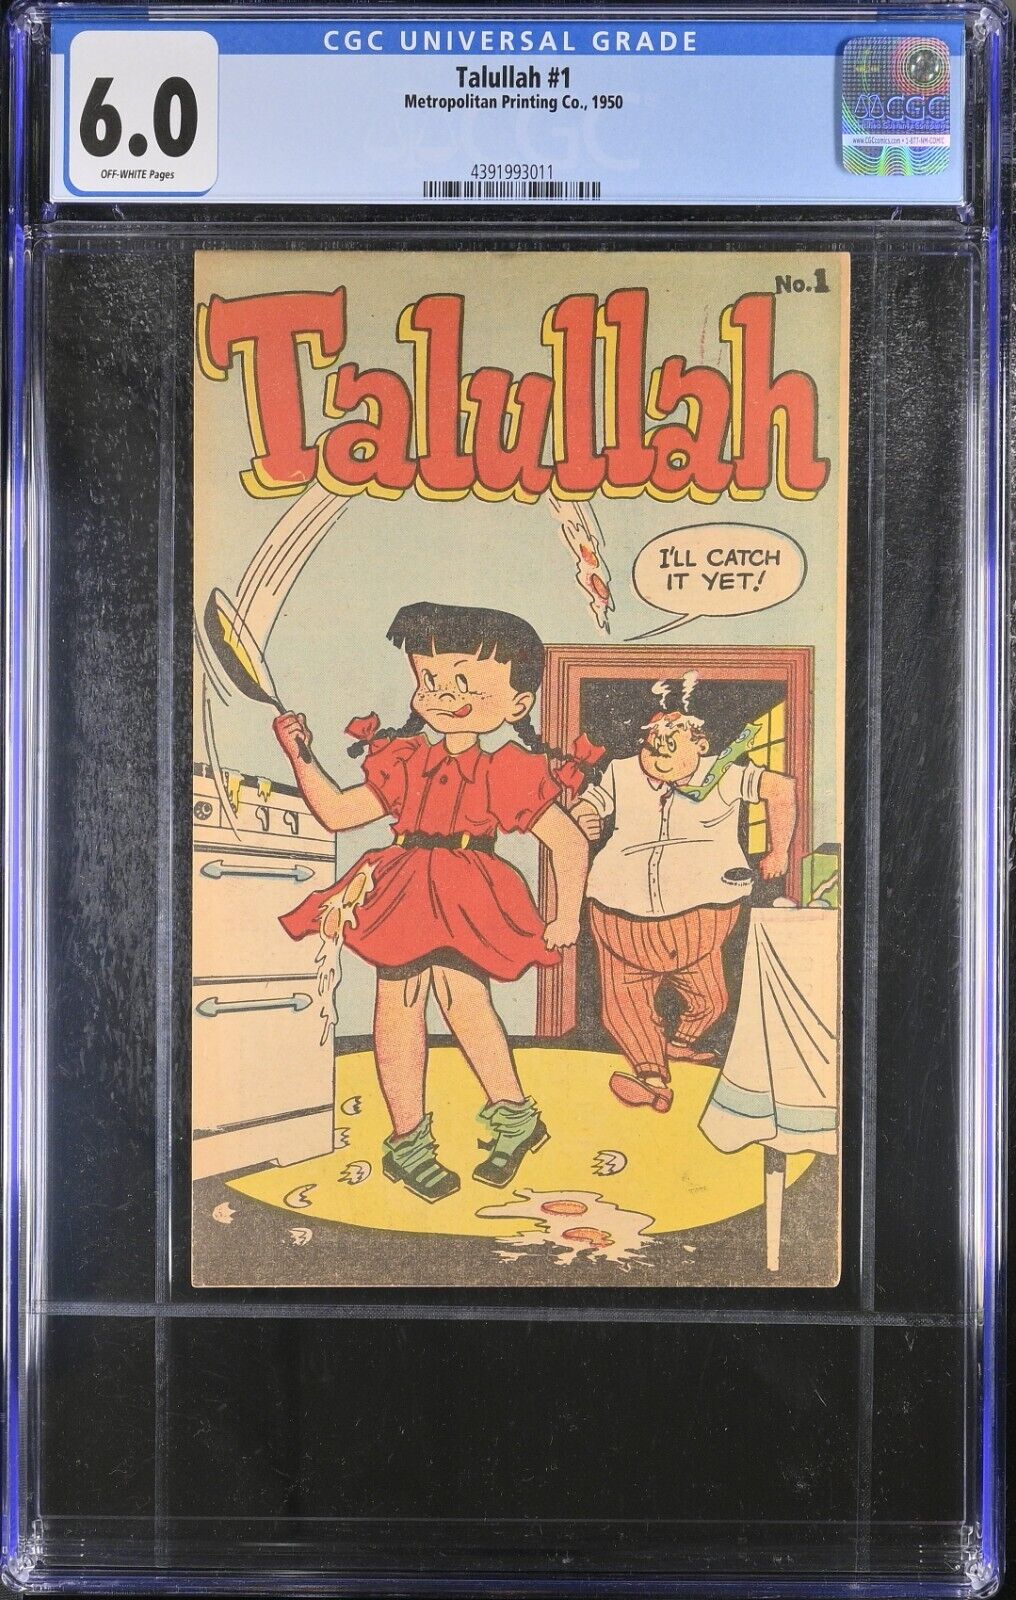 Talullah #1 (1950) Metropolitan Printing Co. CGC 6.0, SCARCE, HTF